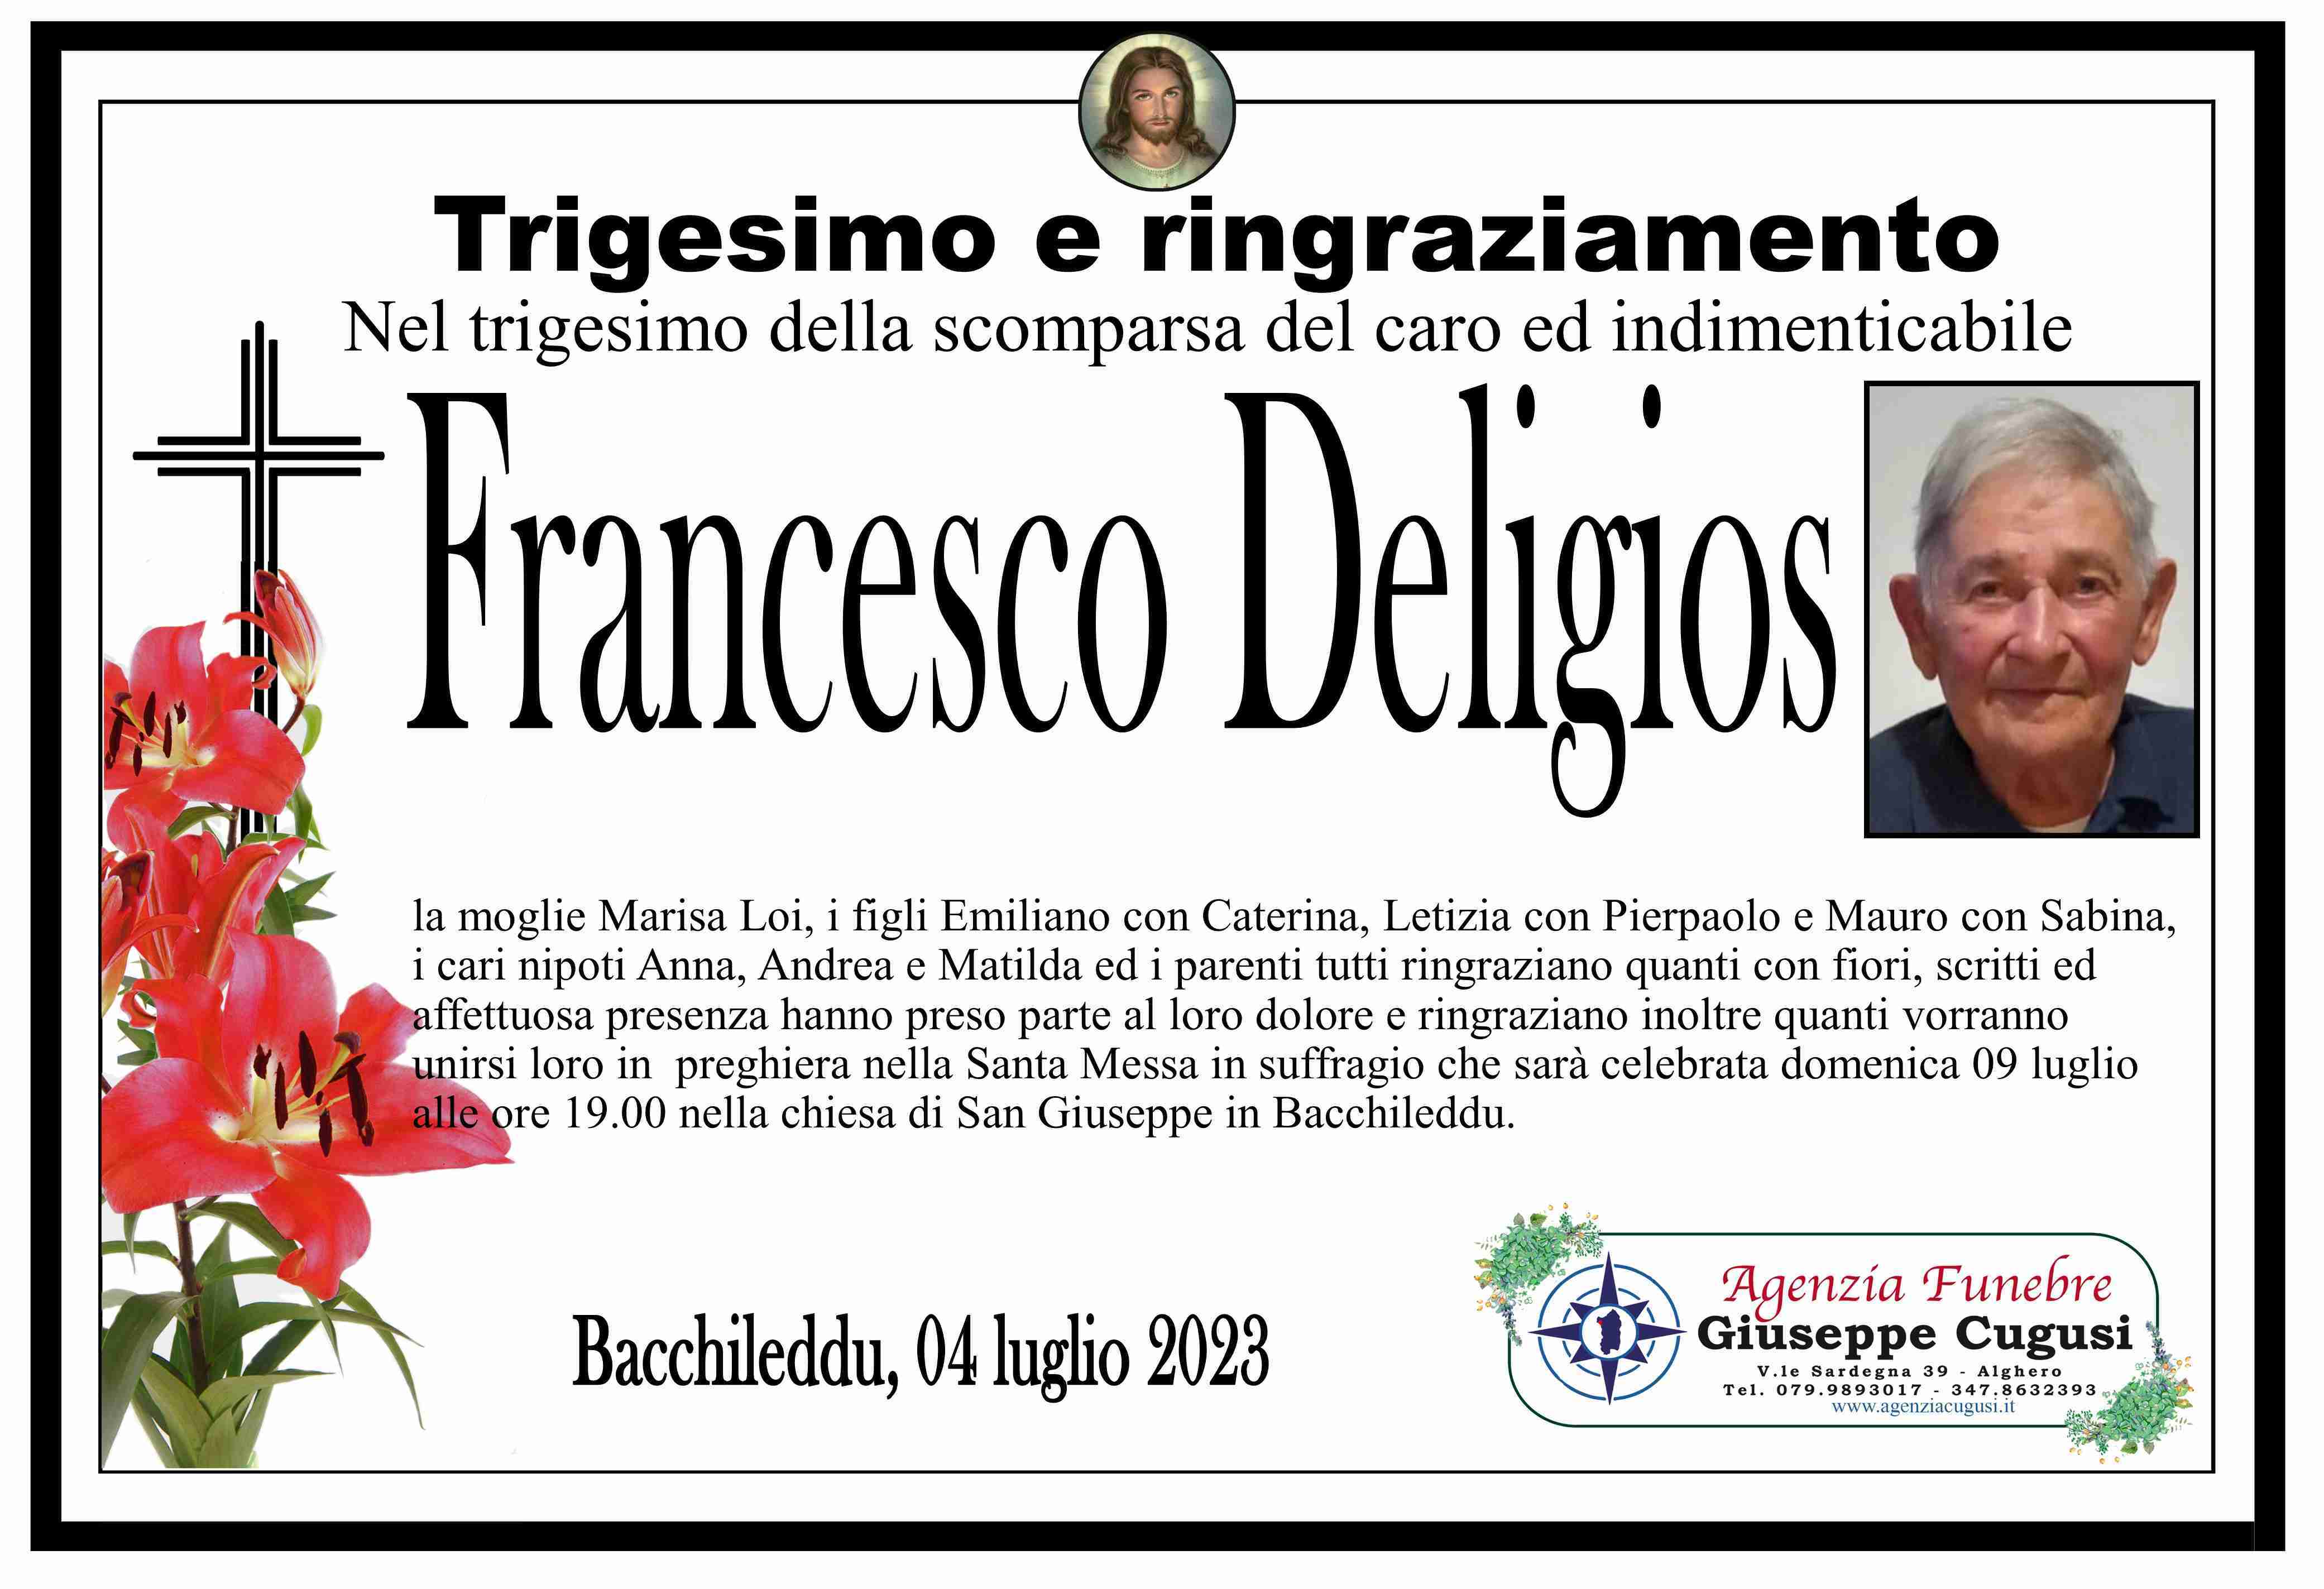 Francesco Deligios